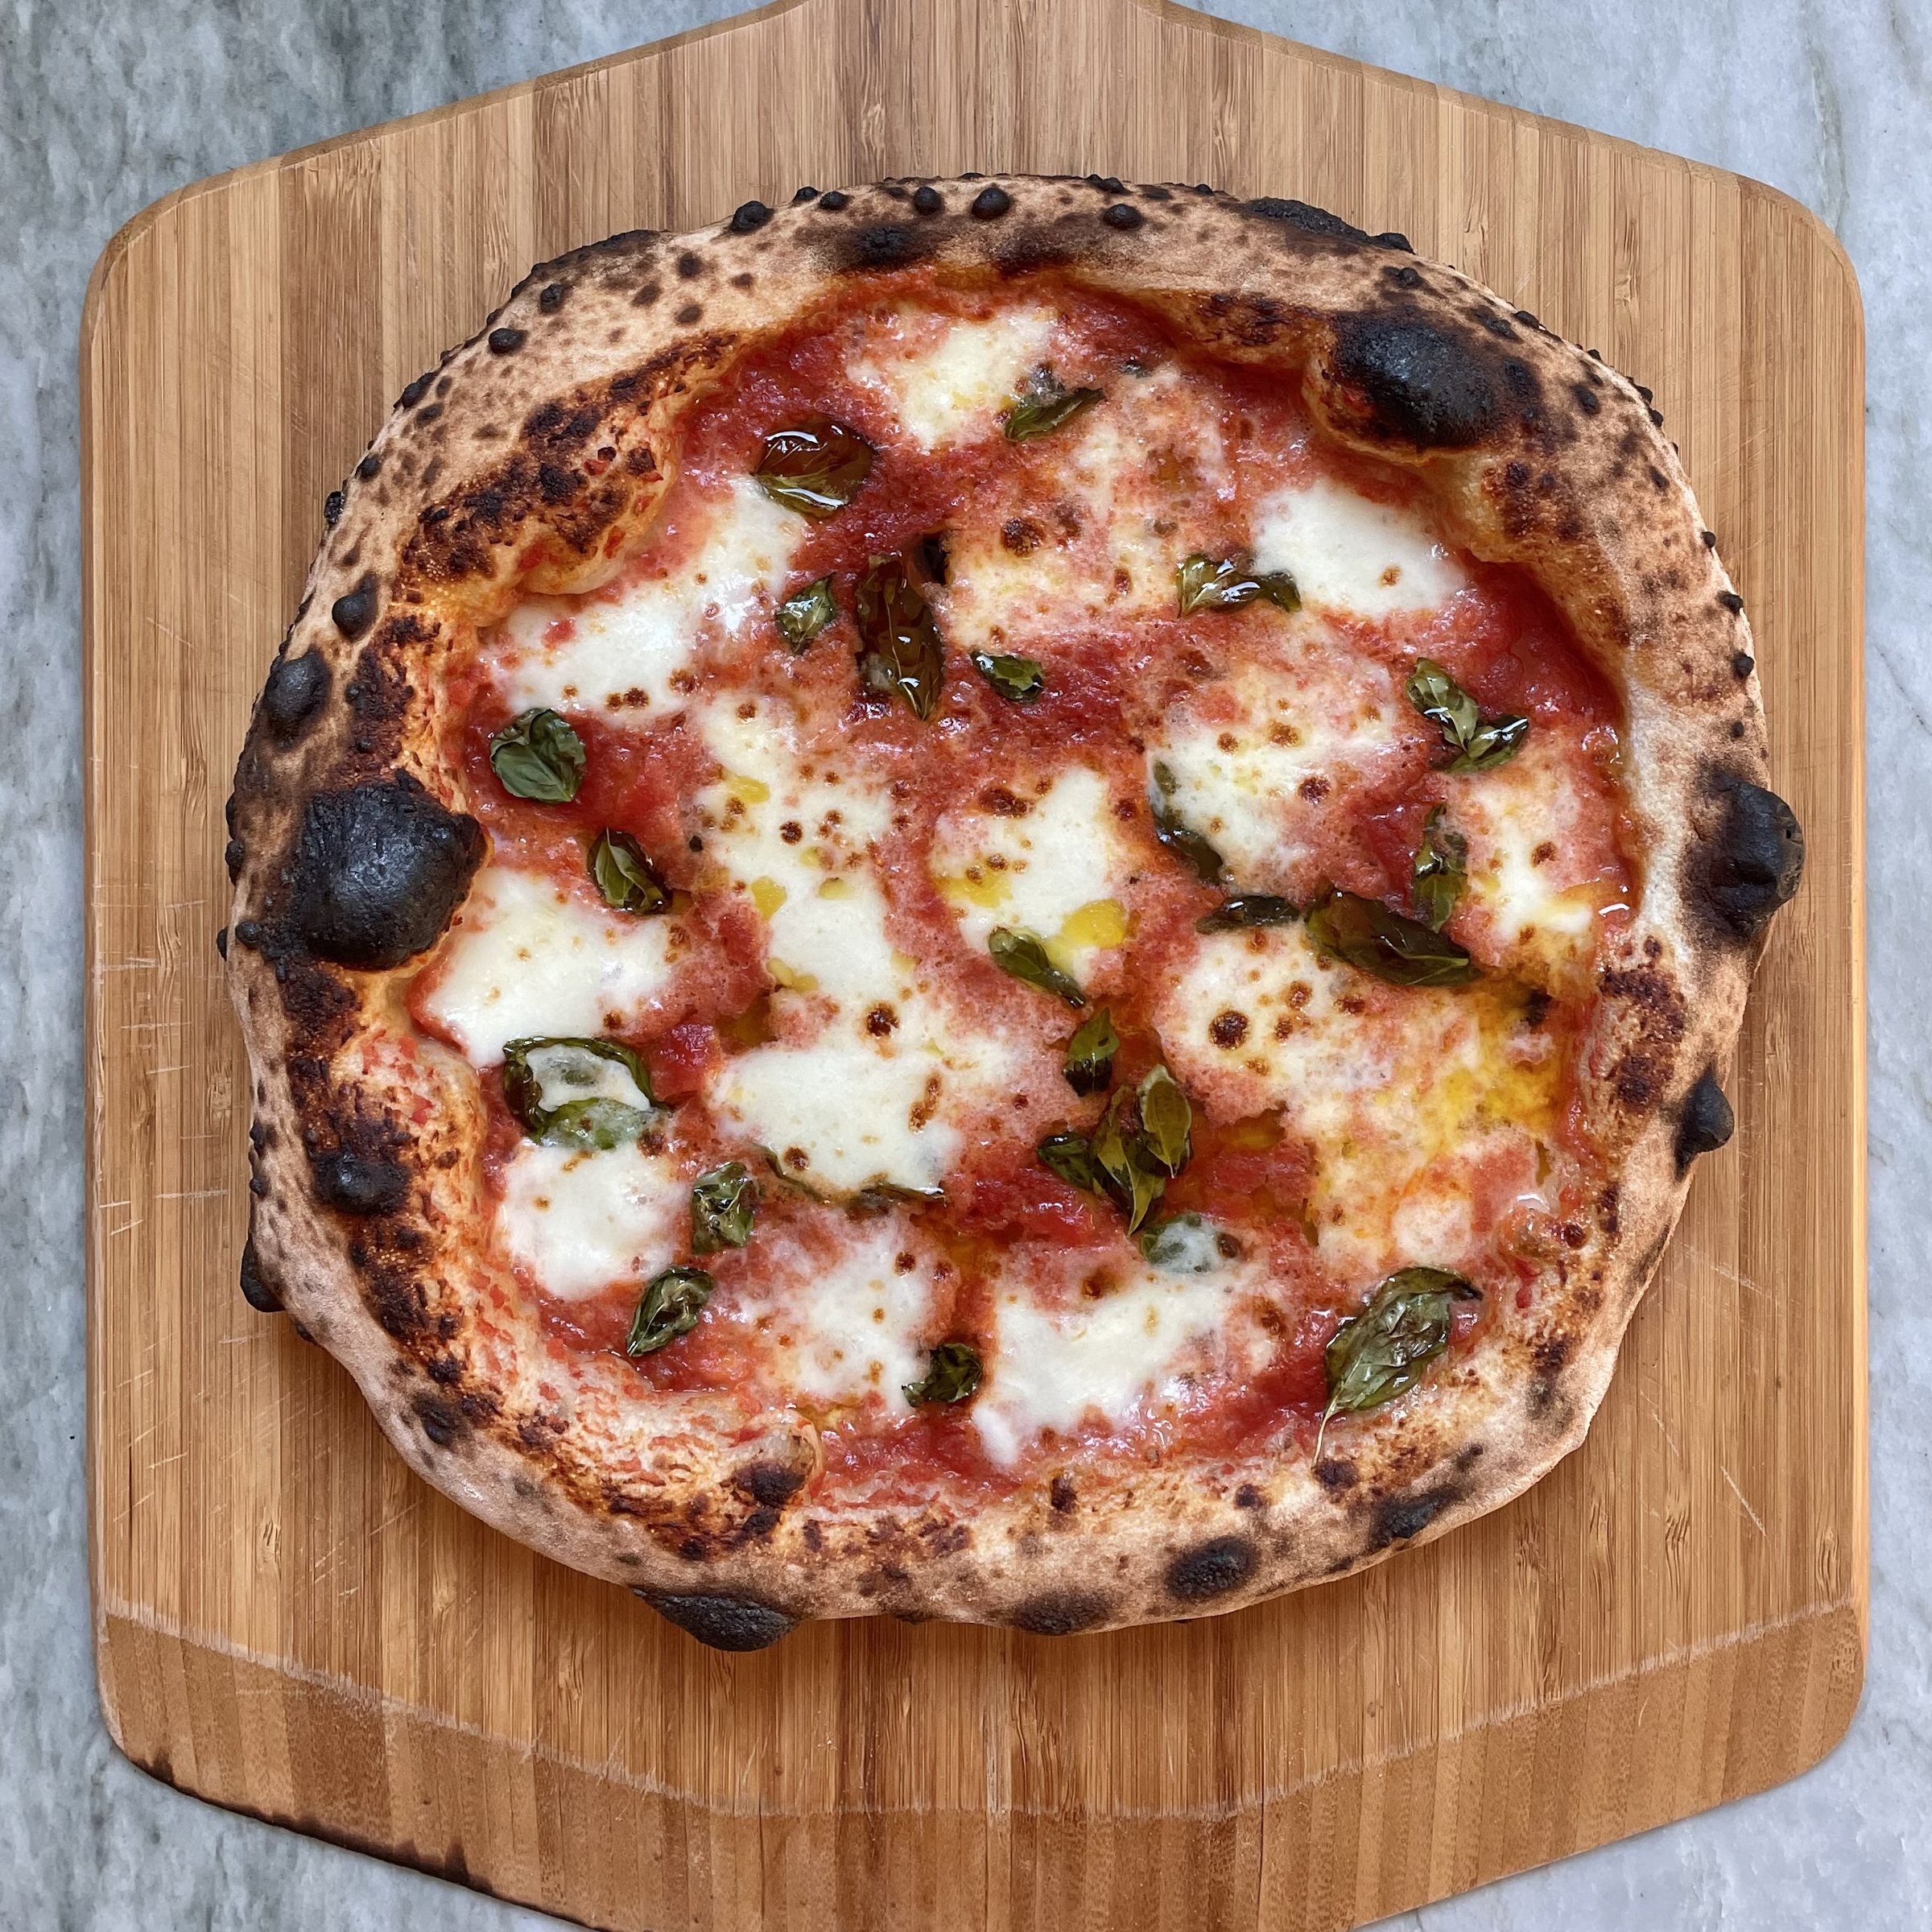 Buy the Best Mixer for Pizza Dough - Italian Pizza Secrets